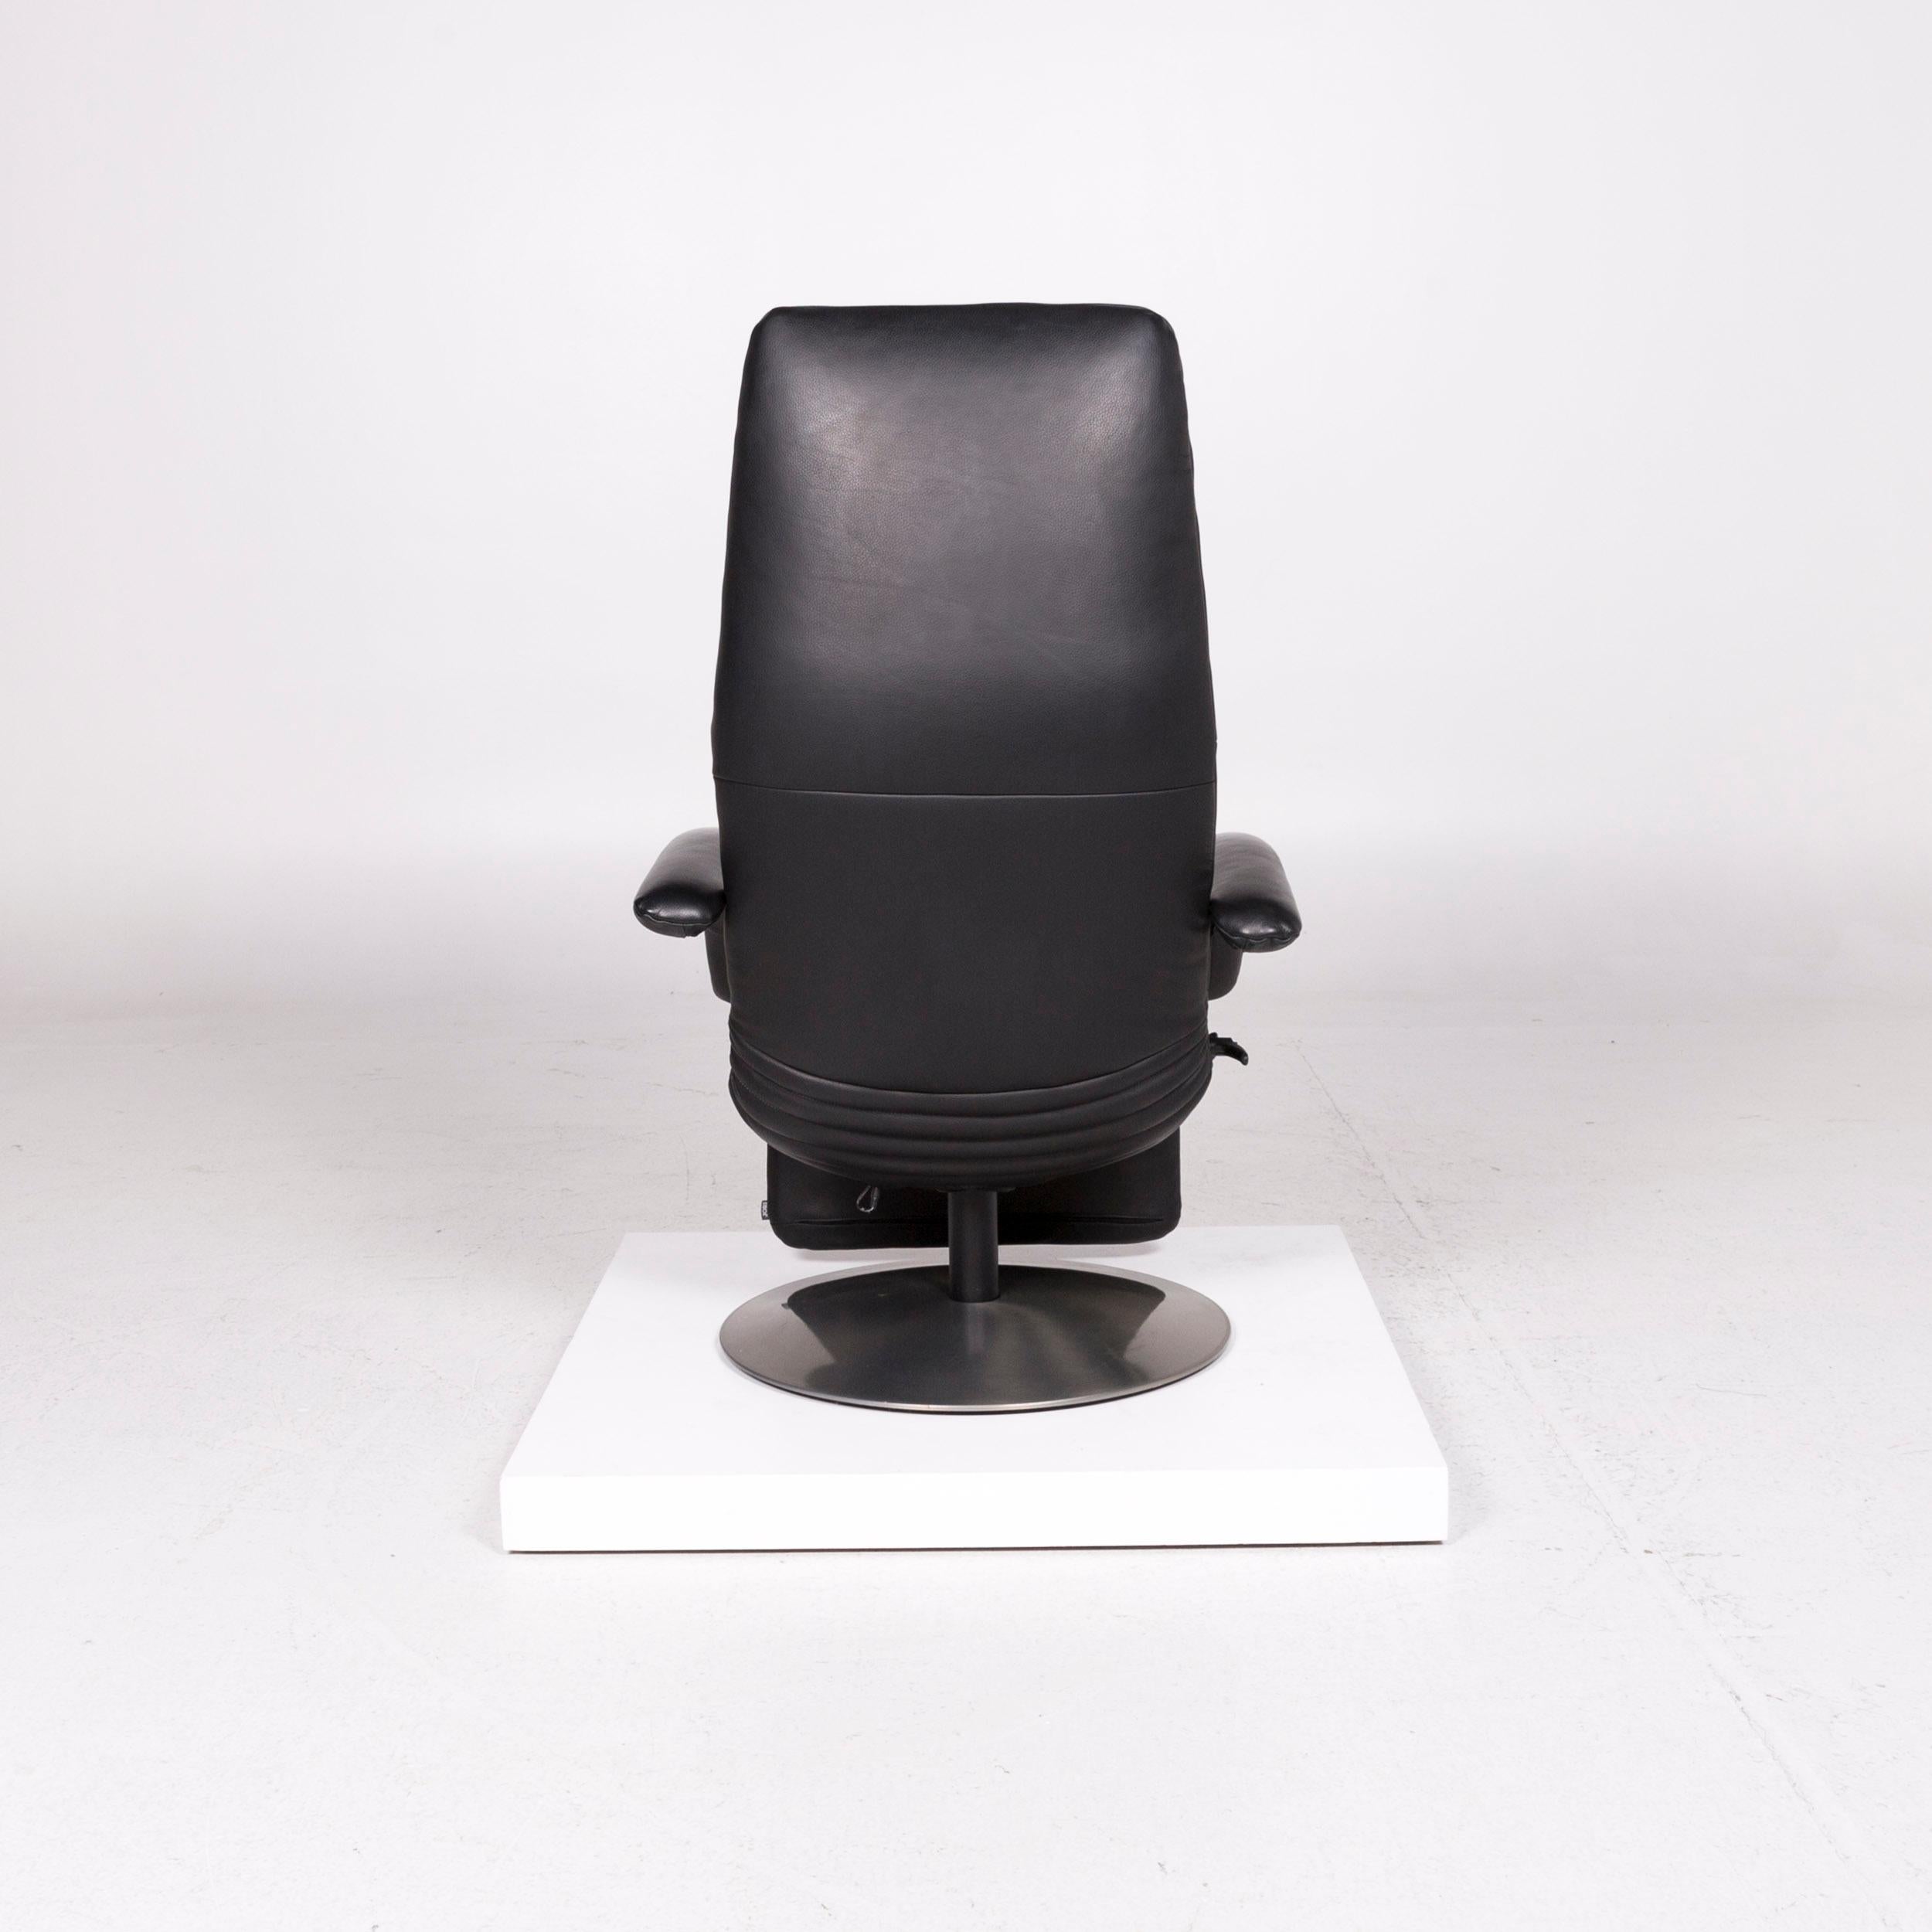 JORI Leather Armchair Black Relax Function Massage Function Massage Chair 4